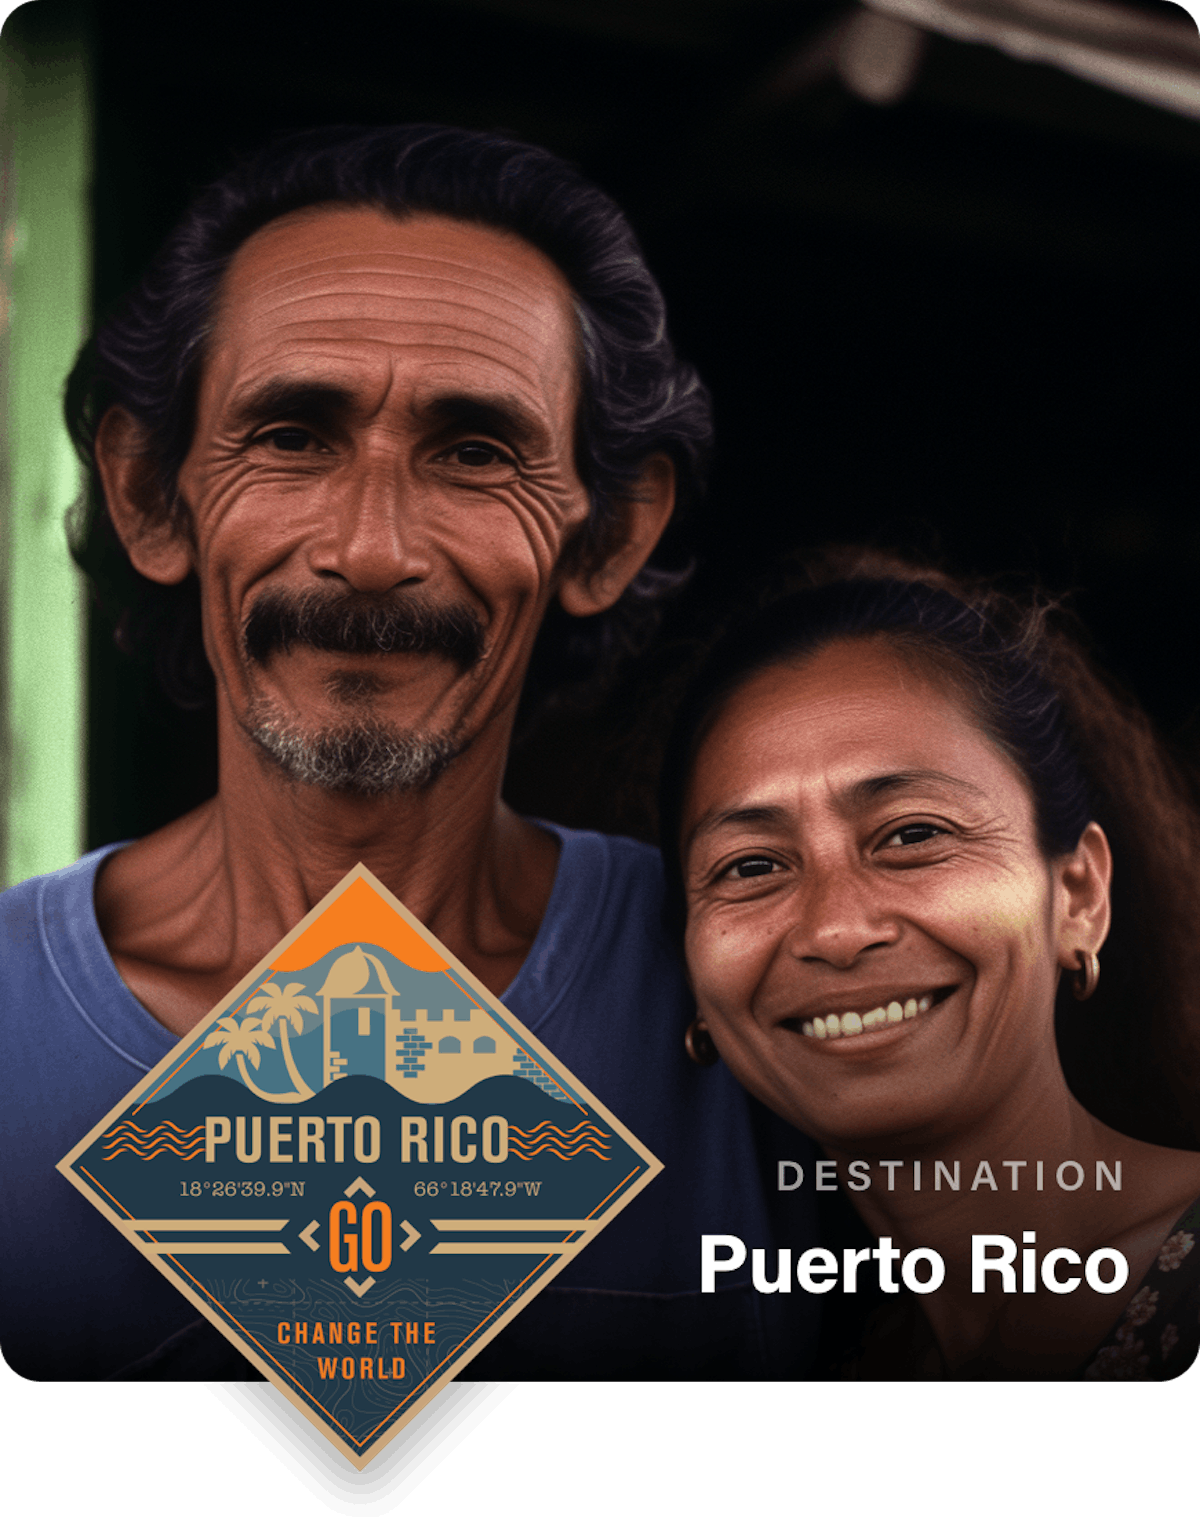 image of puerto rico destination card